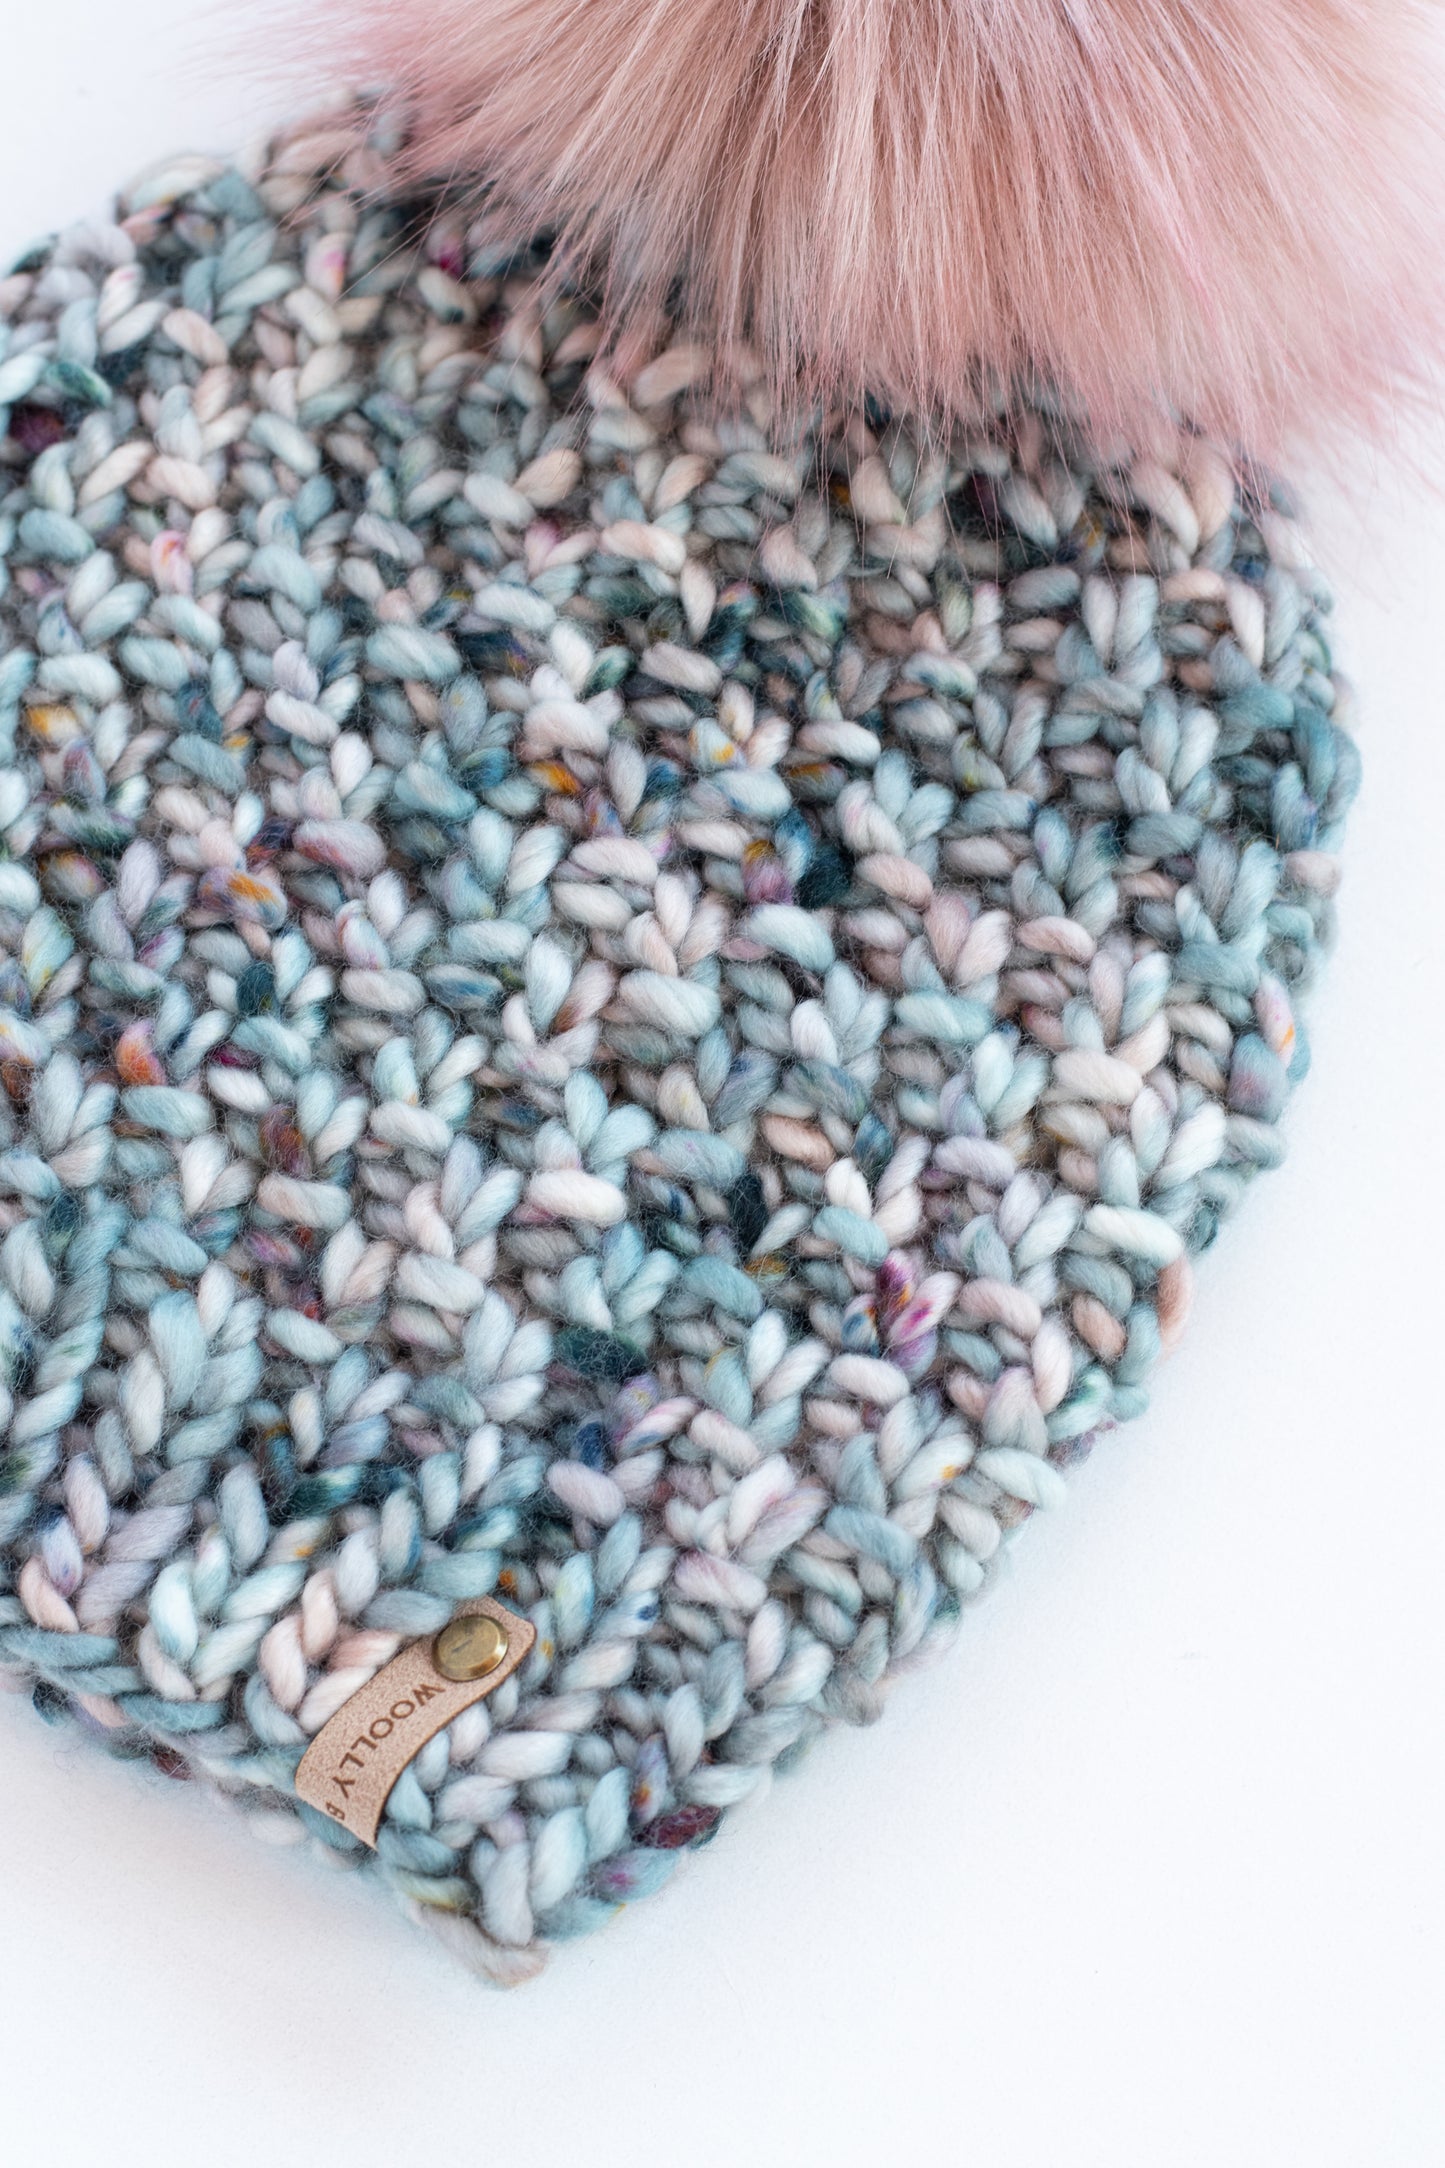 Blue Speckle Merino Wool Knit Hat with Faux Fur Pom Pom - Hand-Dyed Yarn